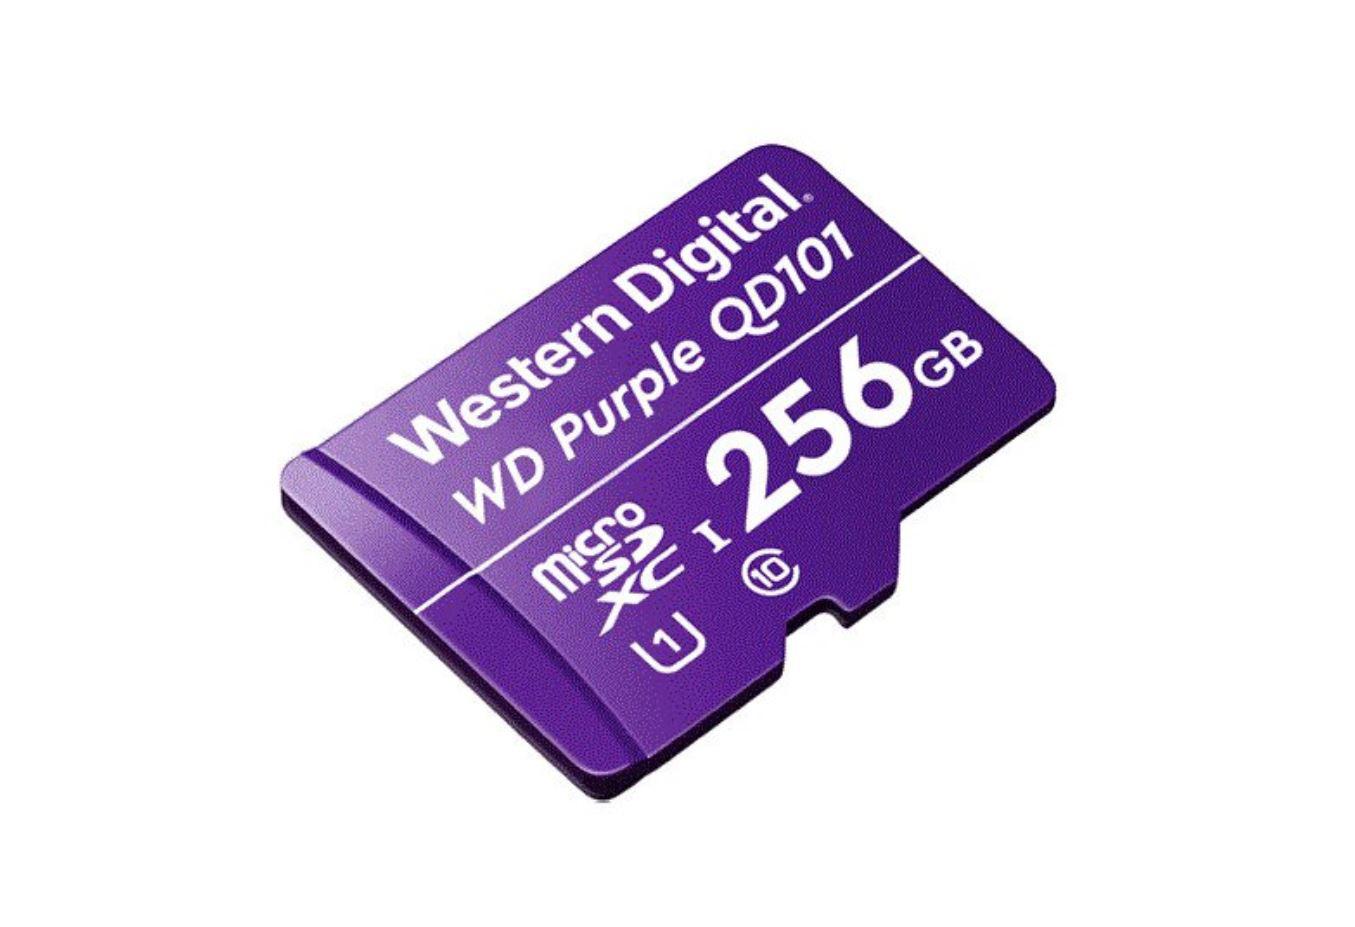 Micro Secure Digital Card Western Digital, 265GB, Clasa 10, Purple